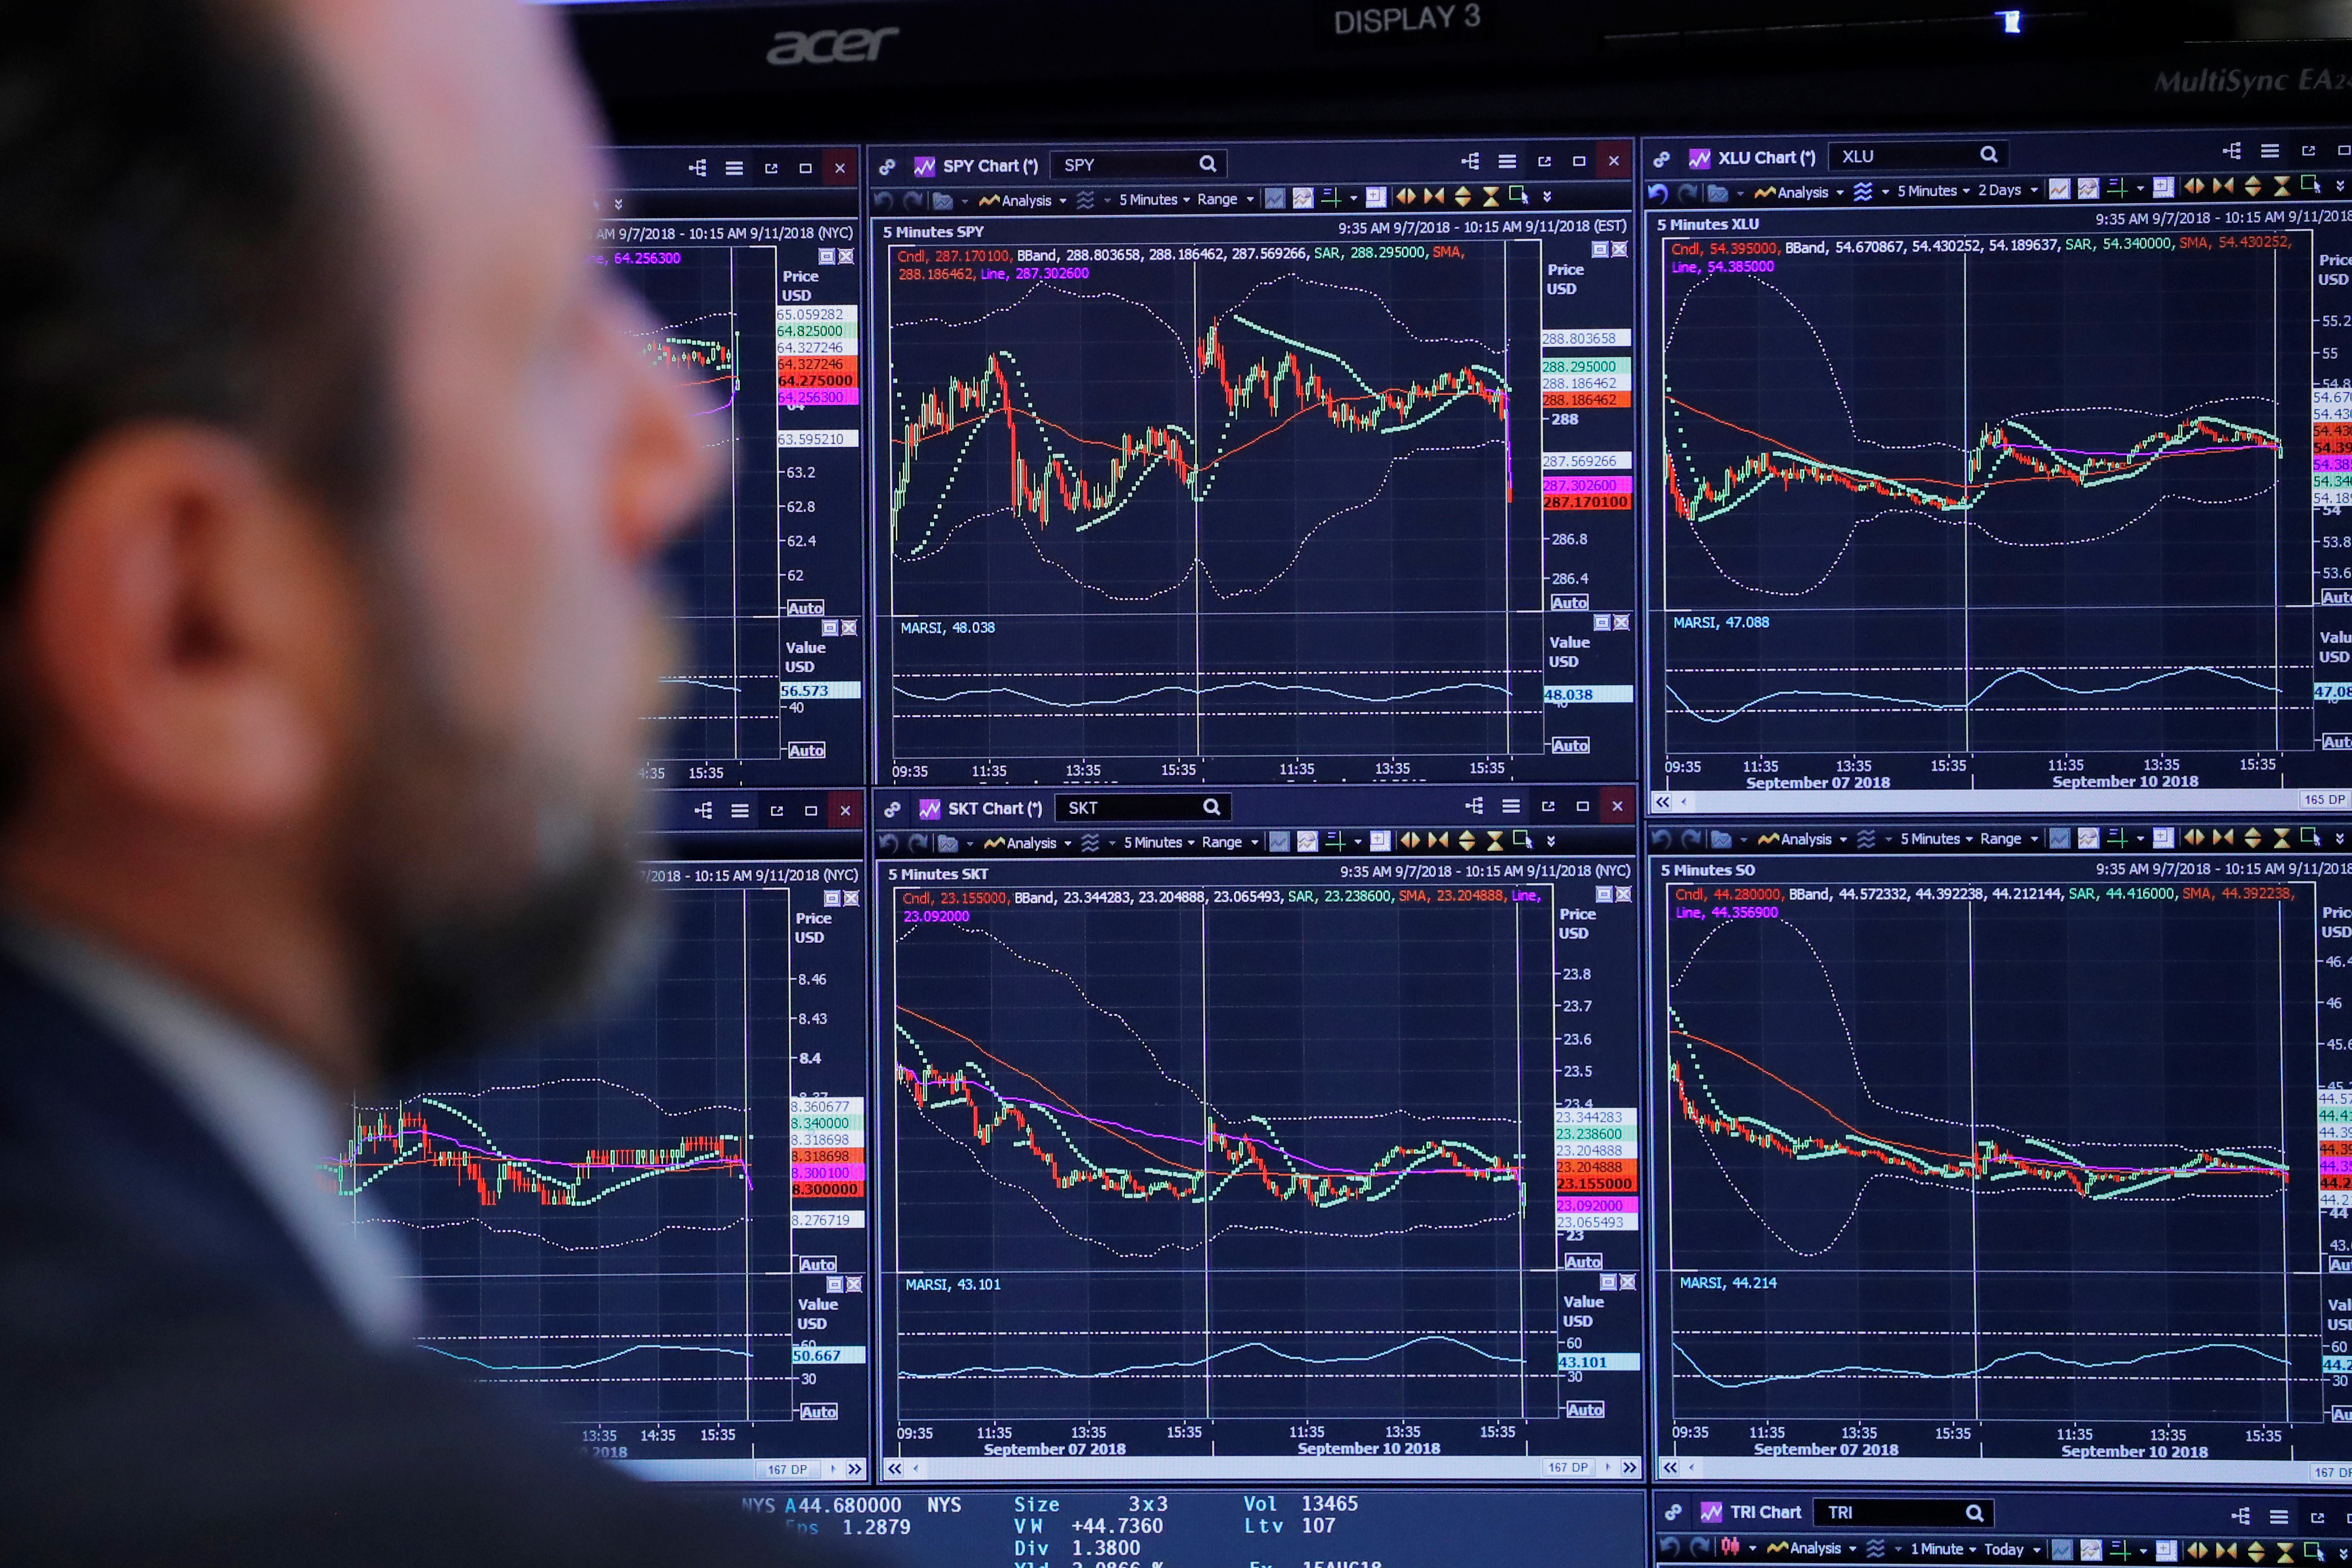 Webinar: Data Gaps Posing Risks to Financial Markets and Economy